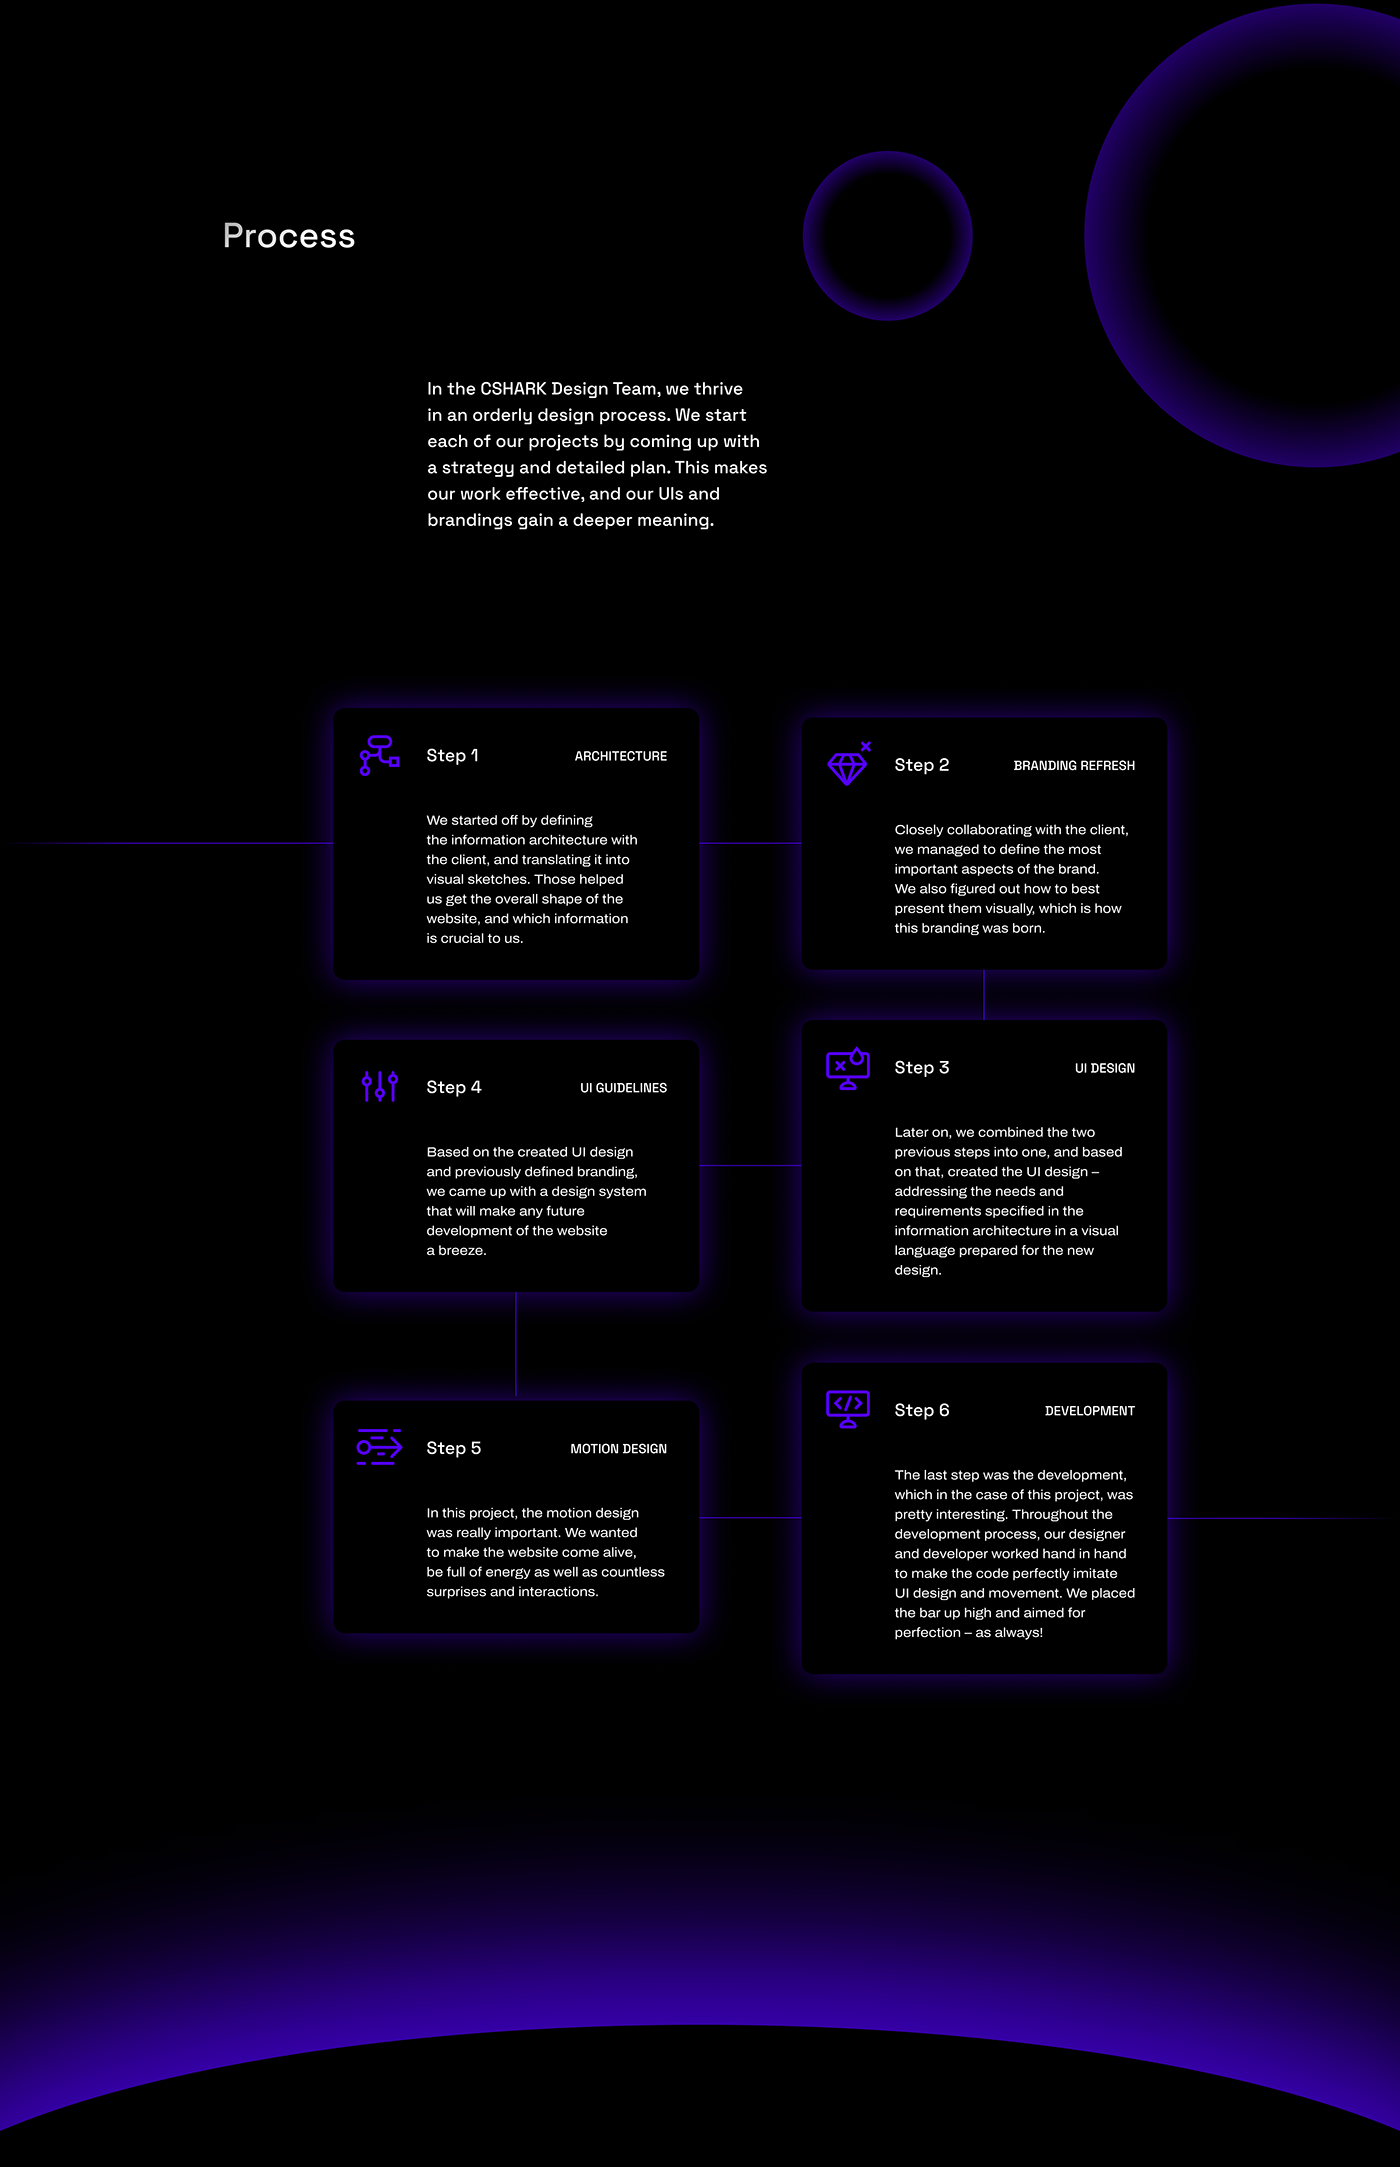 Description of the project process